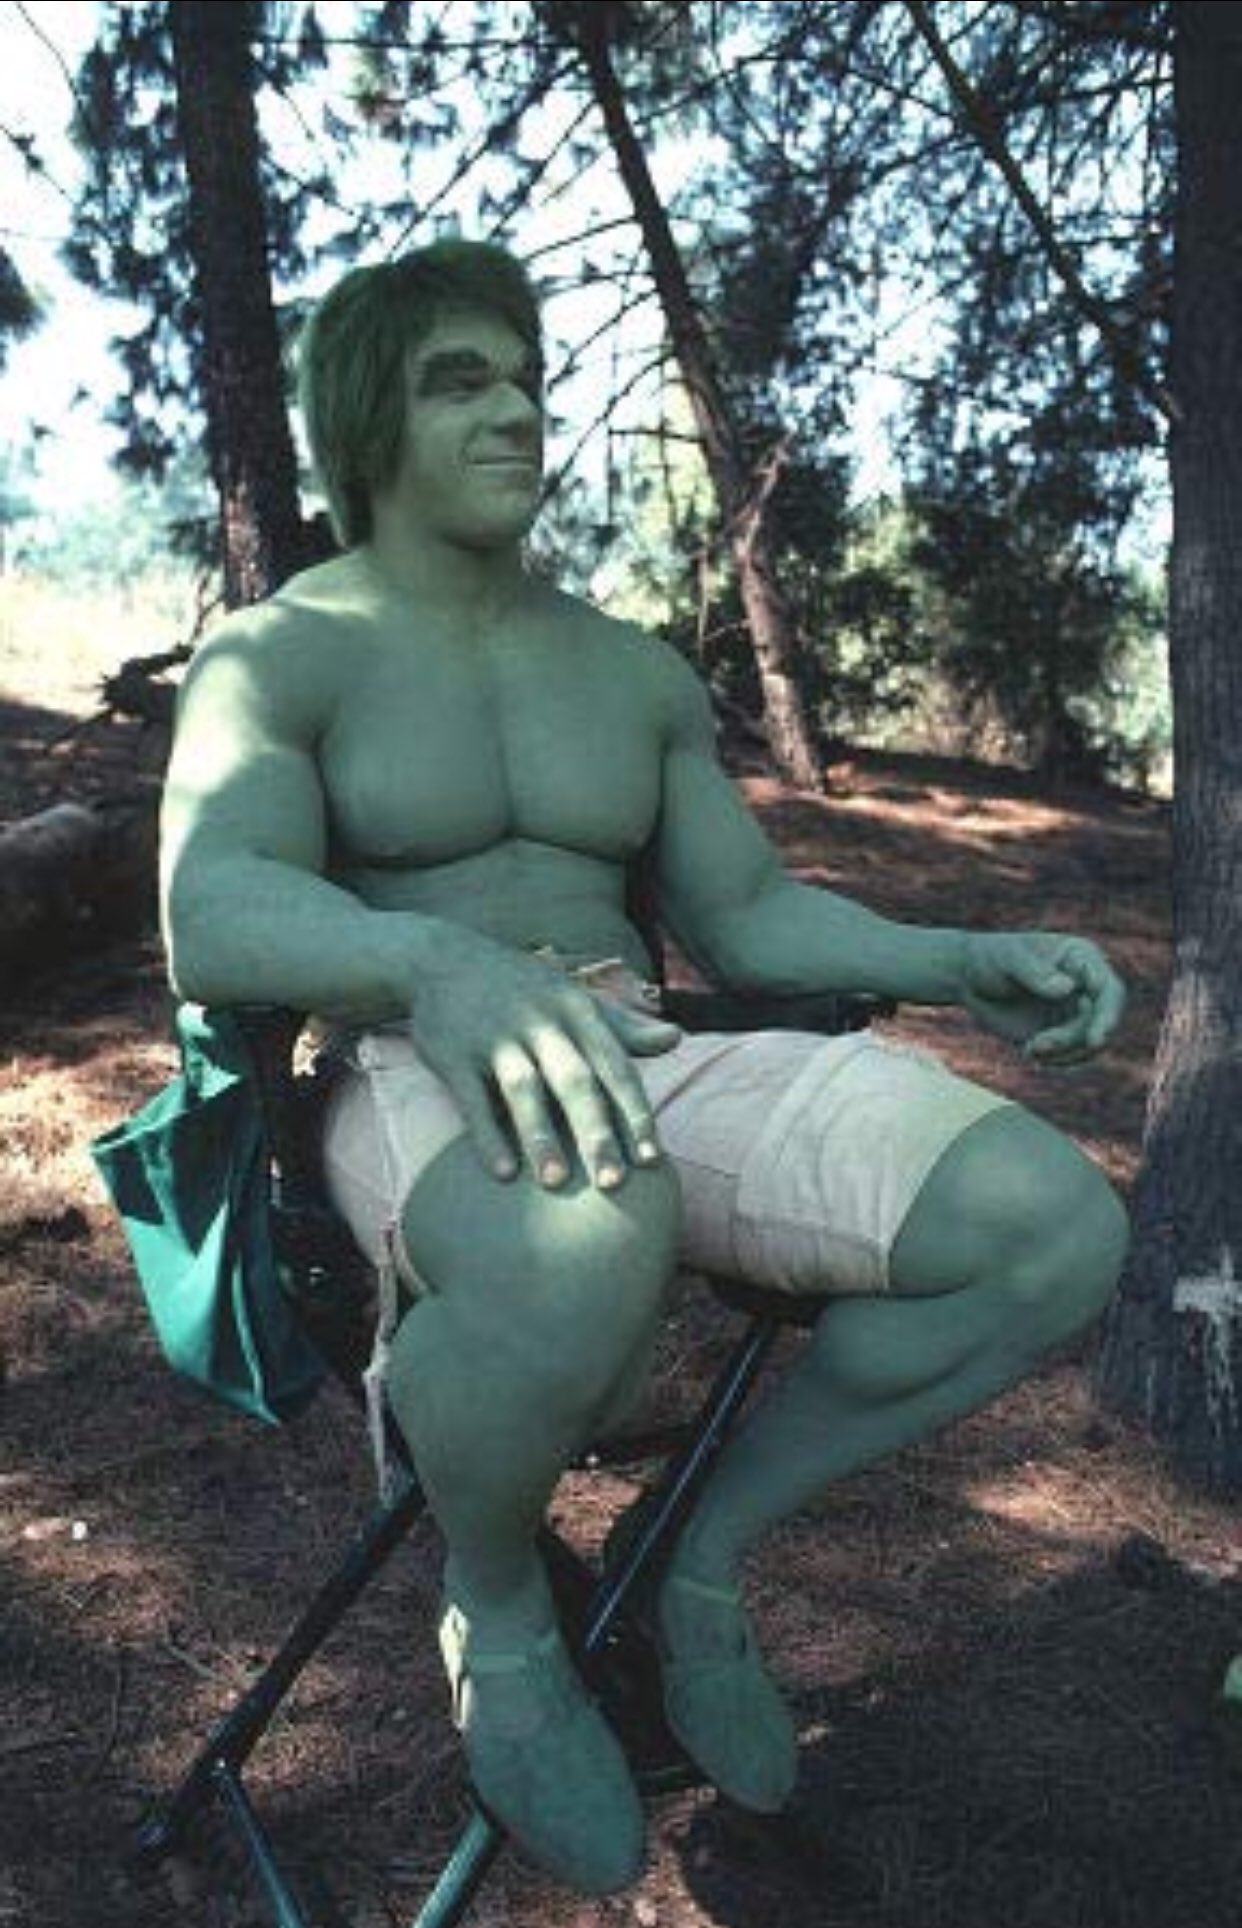 Wishing Lou Ferrigno a happy 67th birthday!! Watch him play on The Incredible Hulk ! 